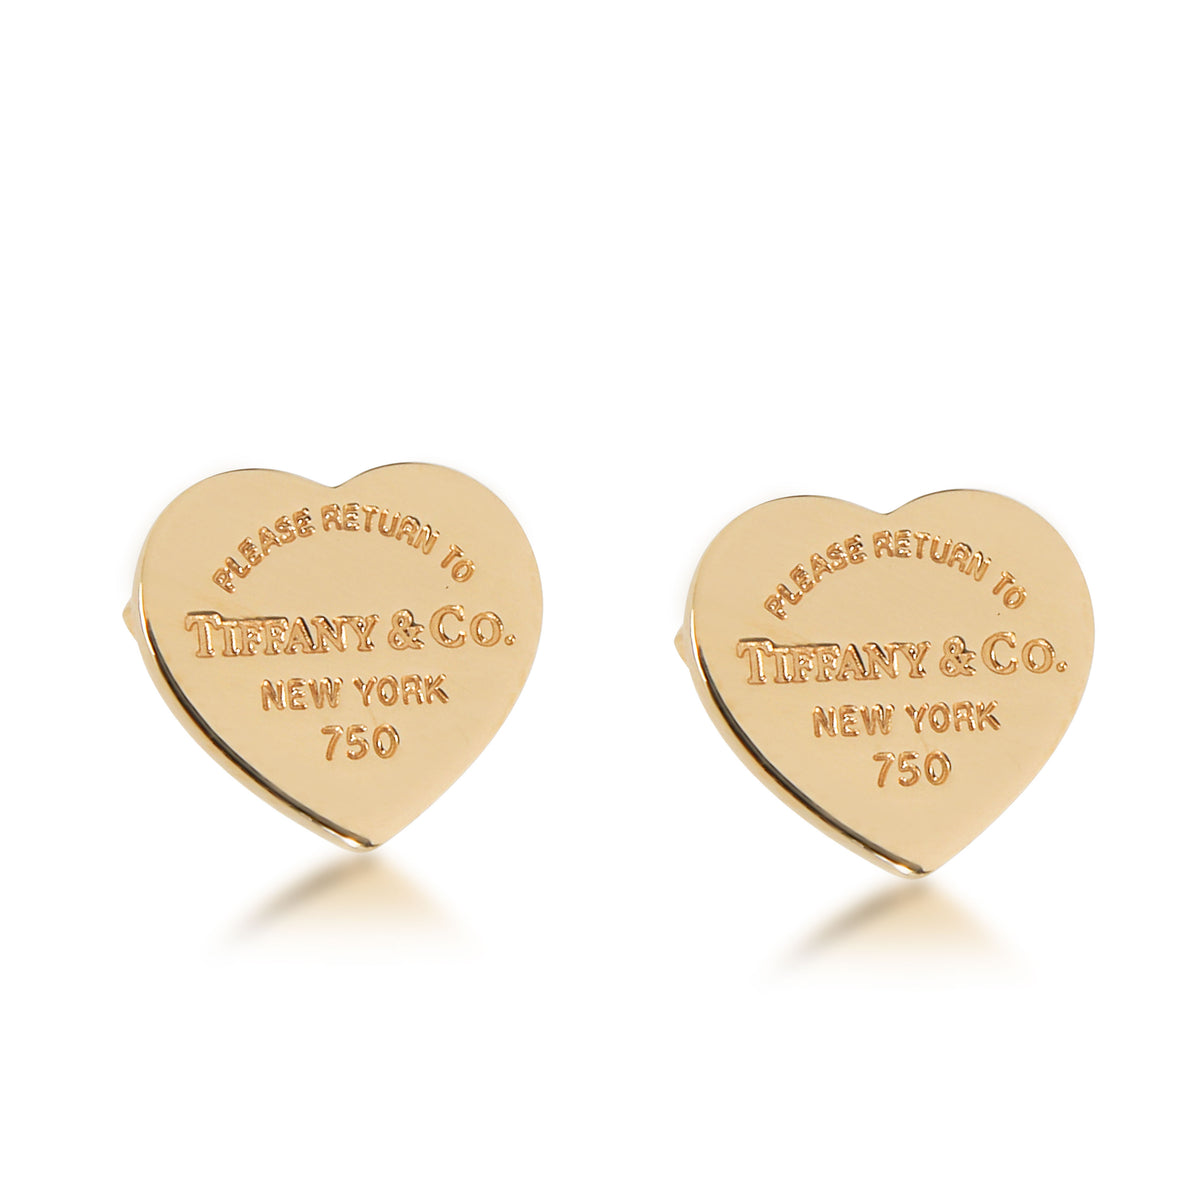 Tiffany & Co. Return to Tiffany Mini Heart Tag Earrings in 18K Yellow Gold